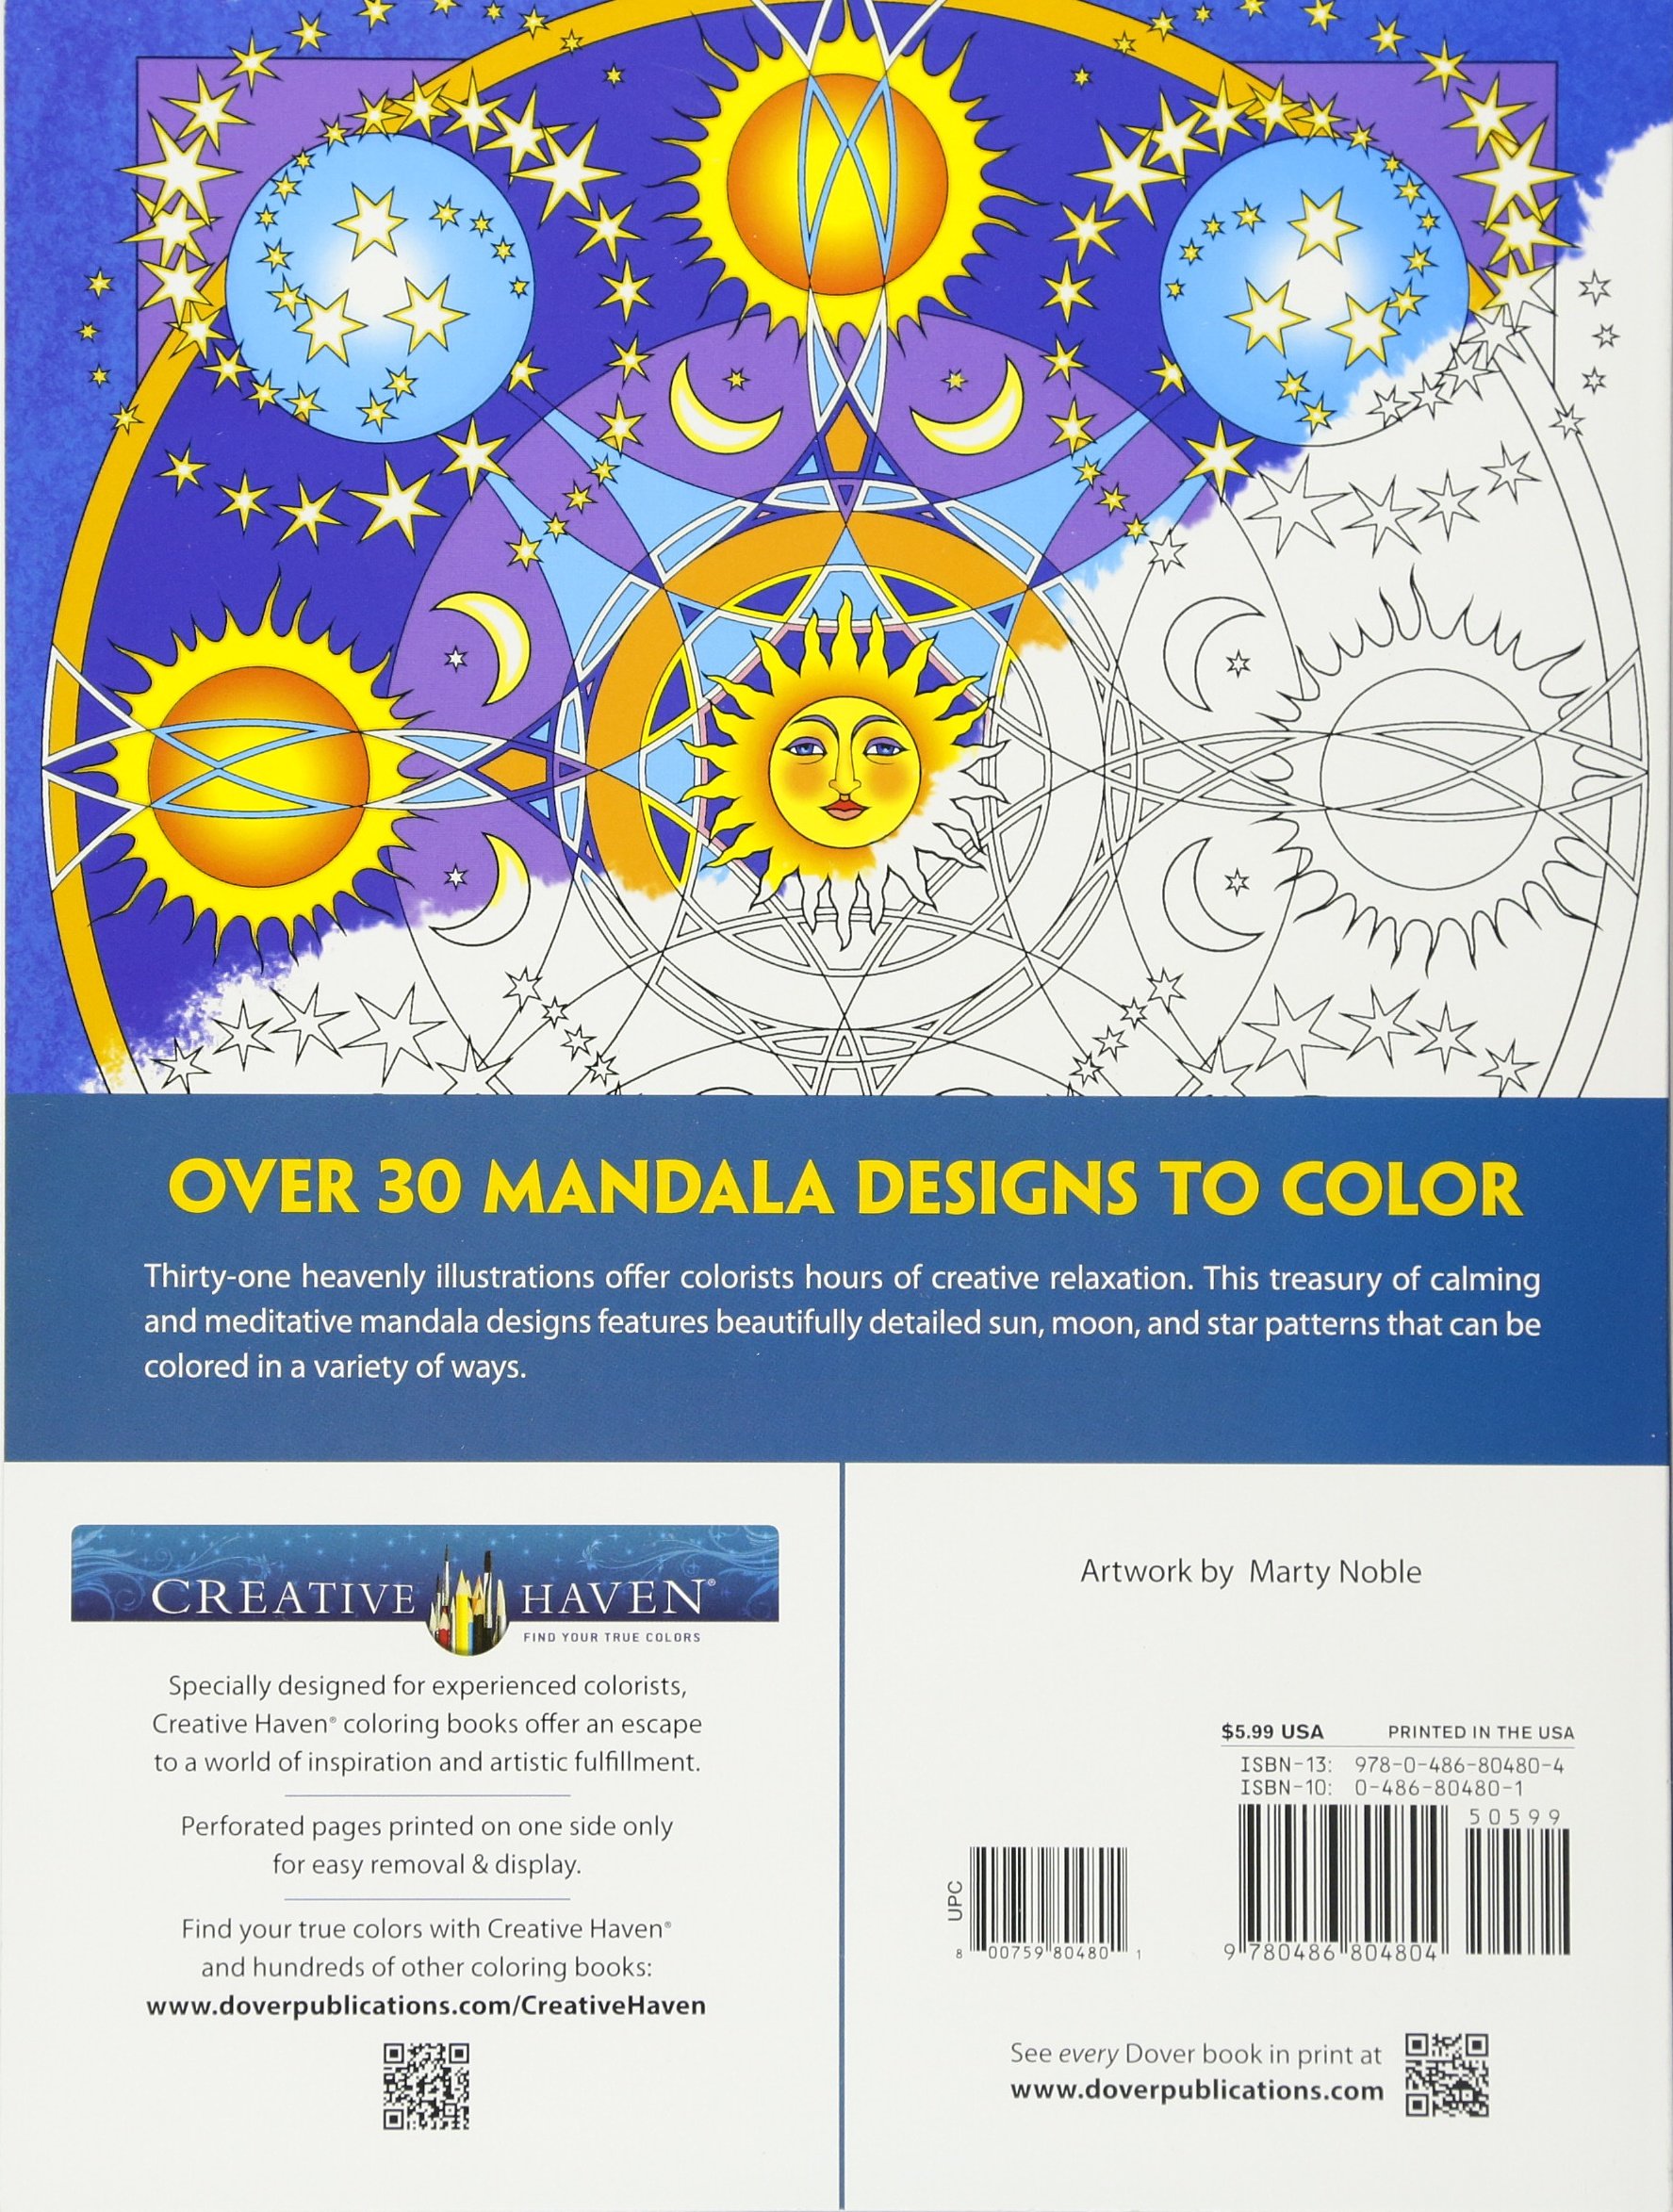 Celestial Mandalas Coloring Book